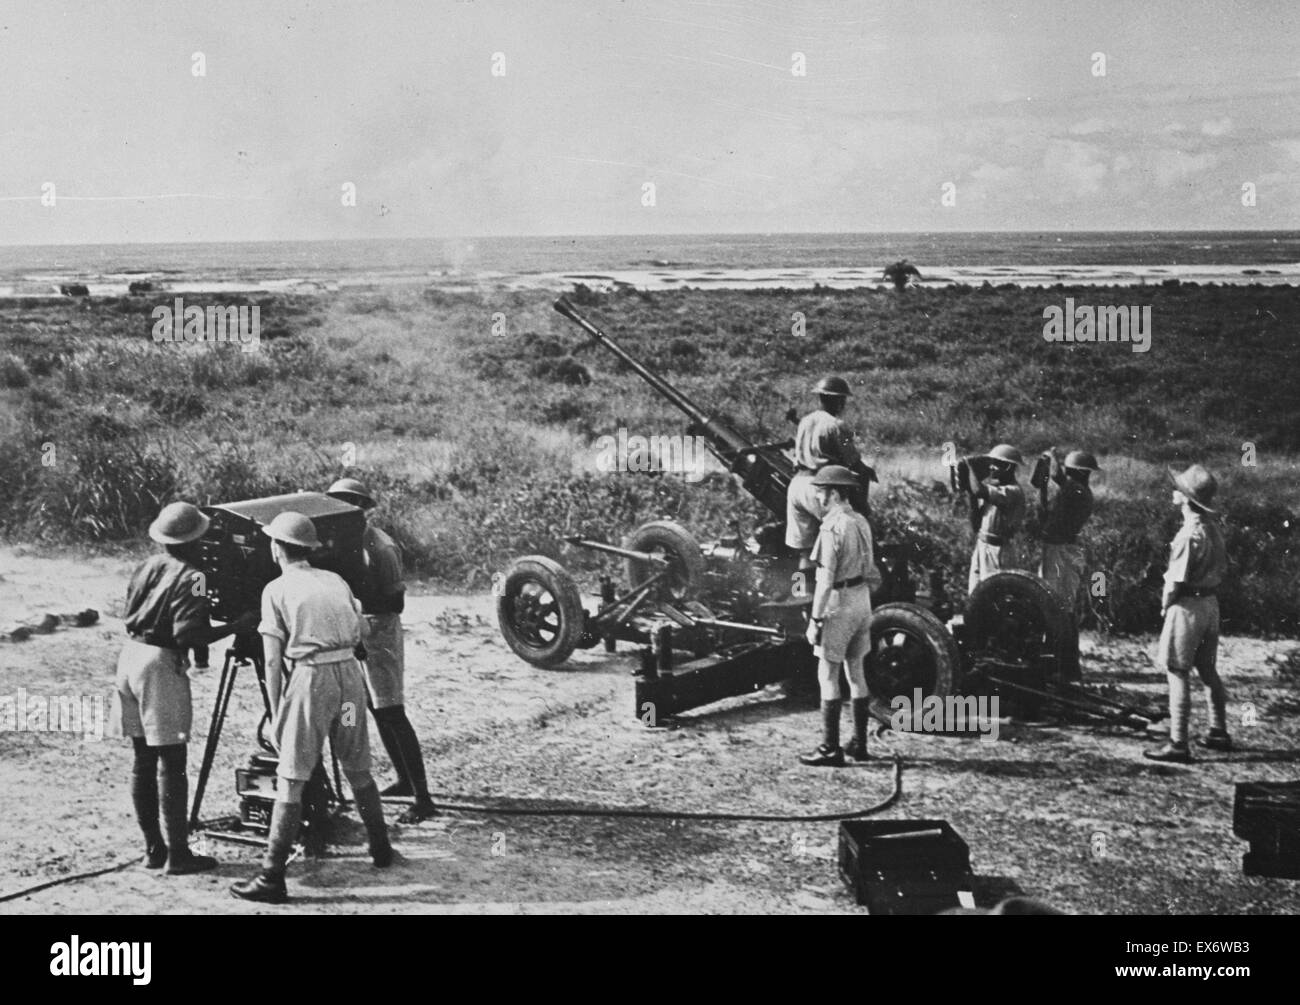 Gold Coast Battery in action. Boors gun firing at target during training. This Gold Coast Battery has a mixed British and African gun crew. between 1940 & 1946. Stock Photo